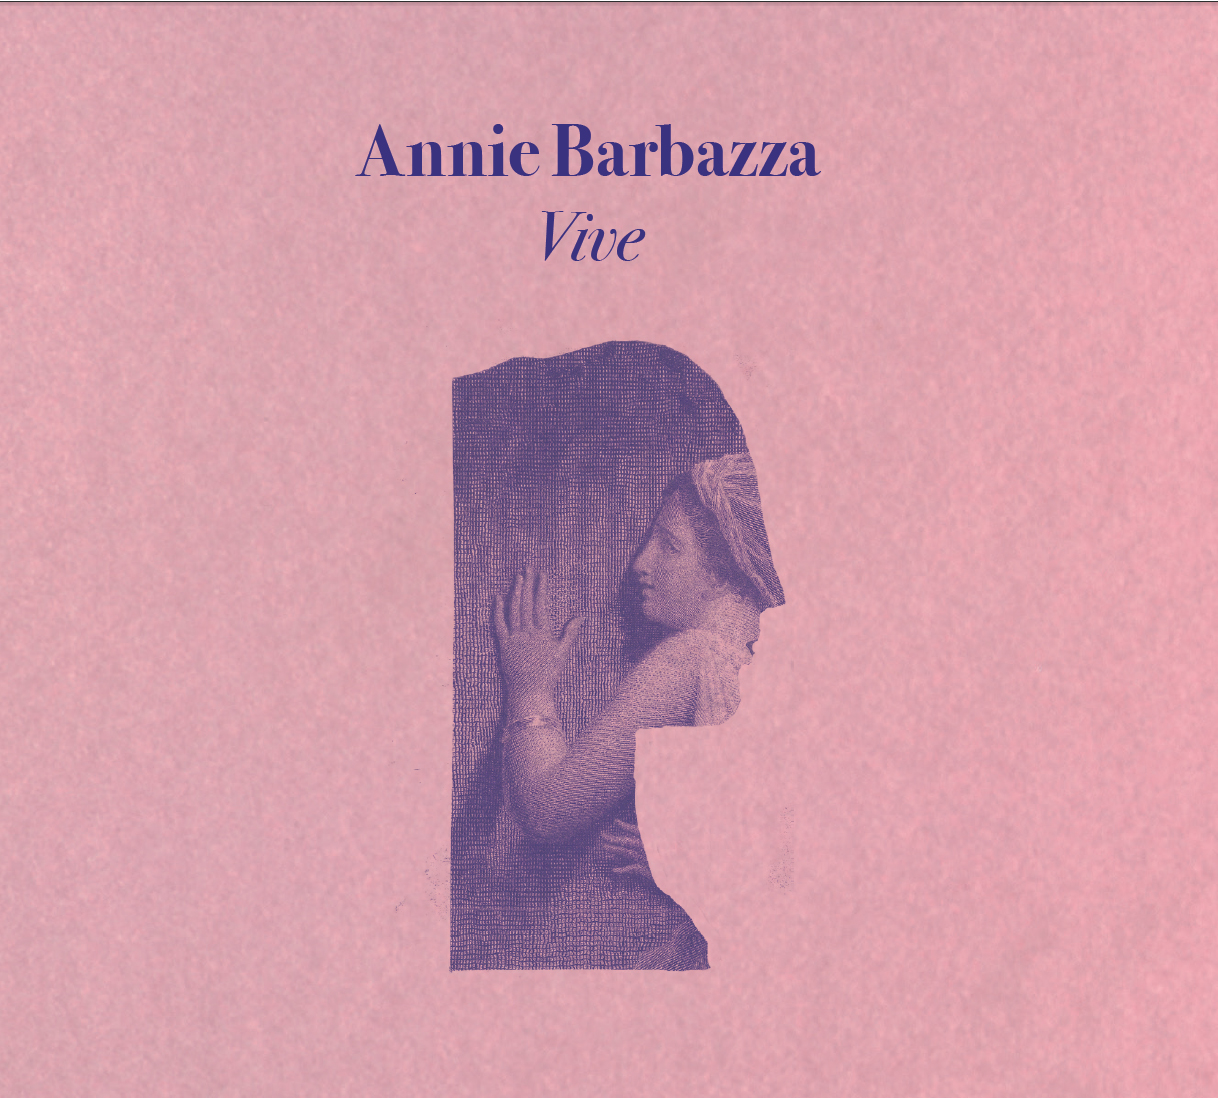 ANNIE BARBAZZA - Vive Lp + CD limited